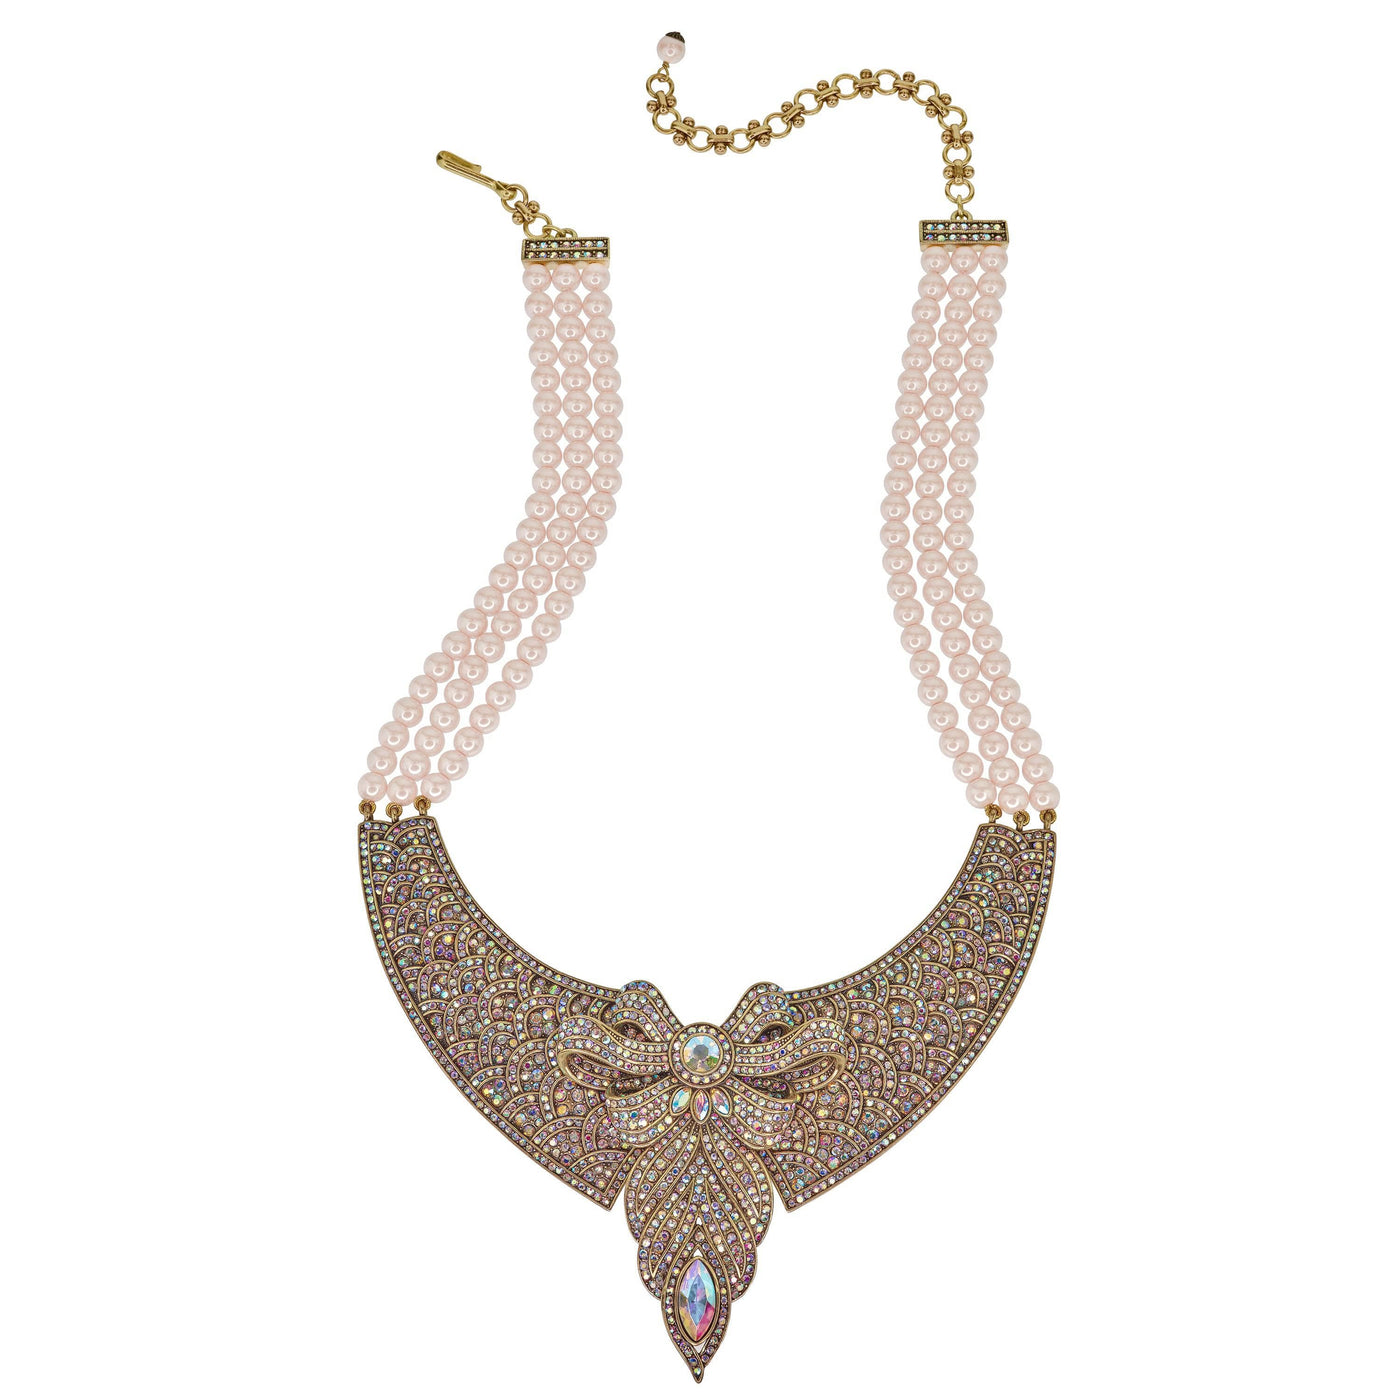 HEIDI DAUS®"Lady Whistledaus" Beaded Crystal Bow Necklace